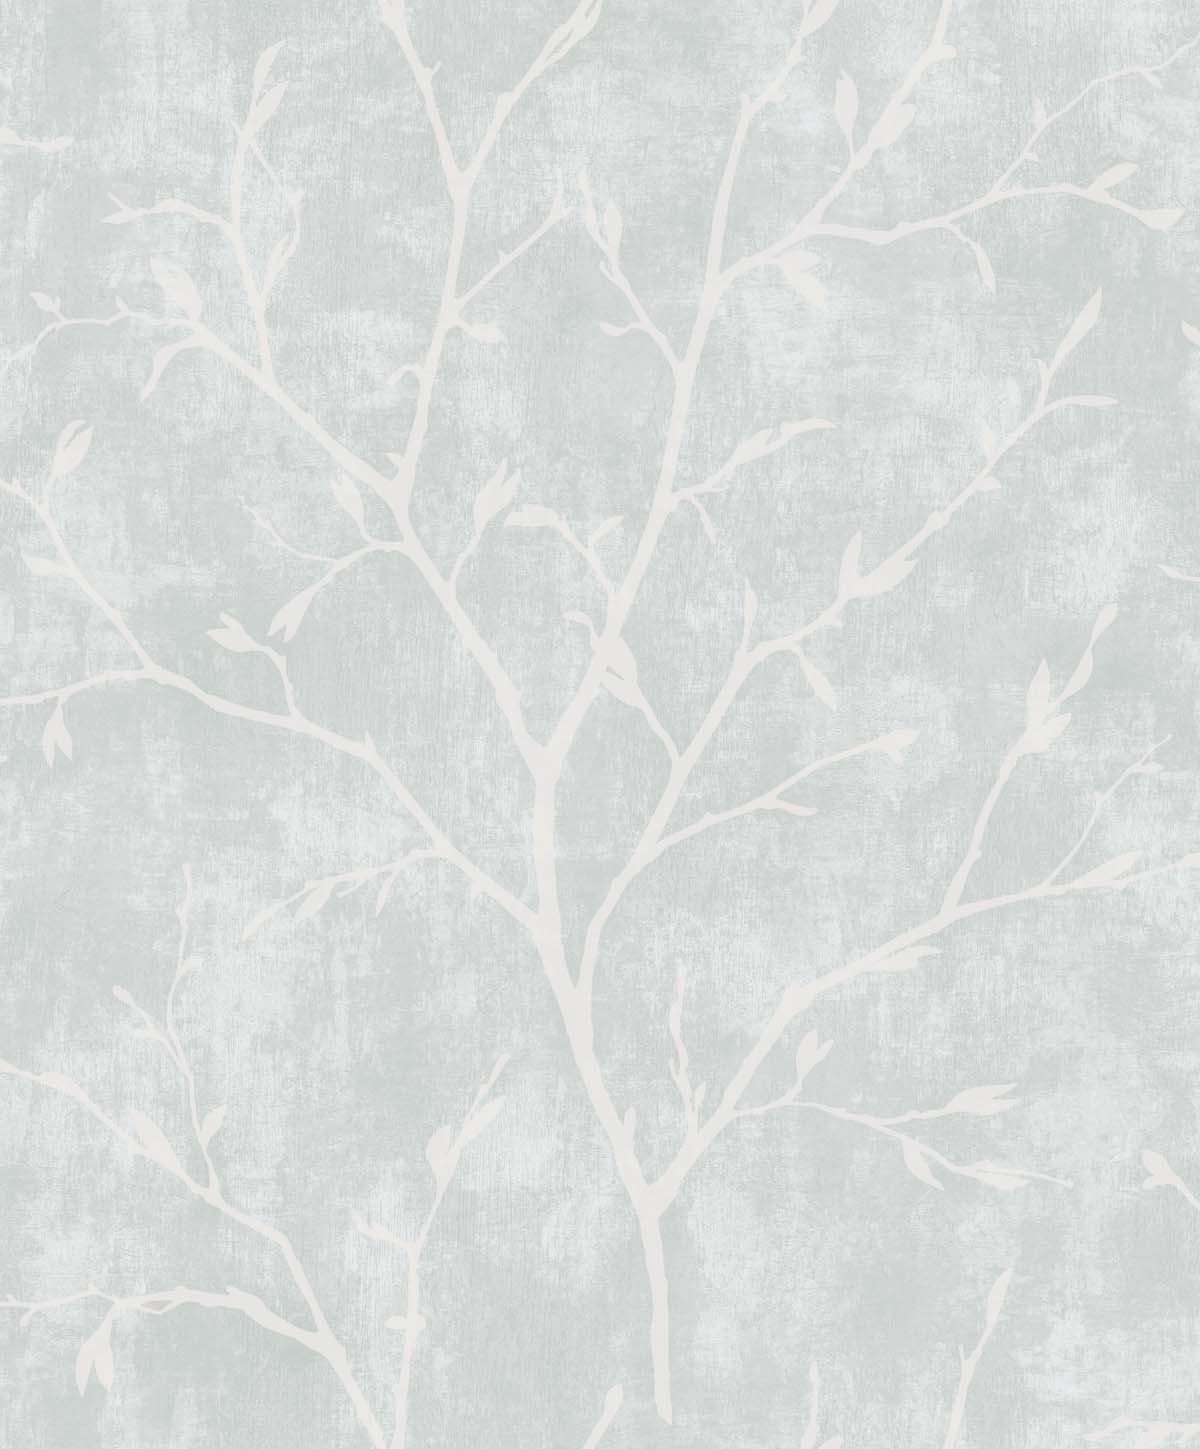 EW10218 | Avena Branches, Grey - Seabrook Designs Wallpaper